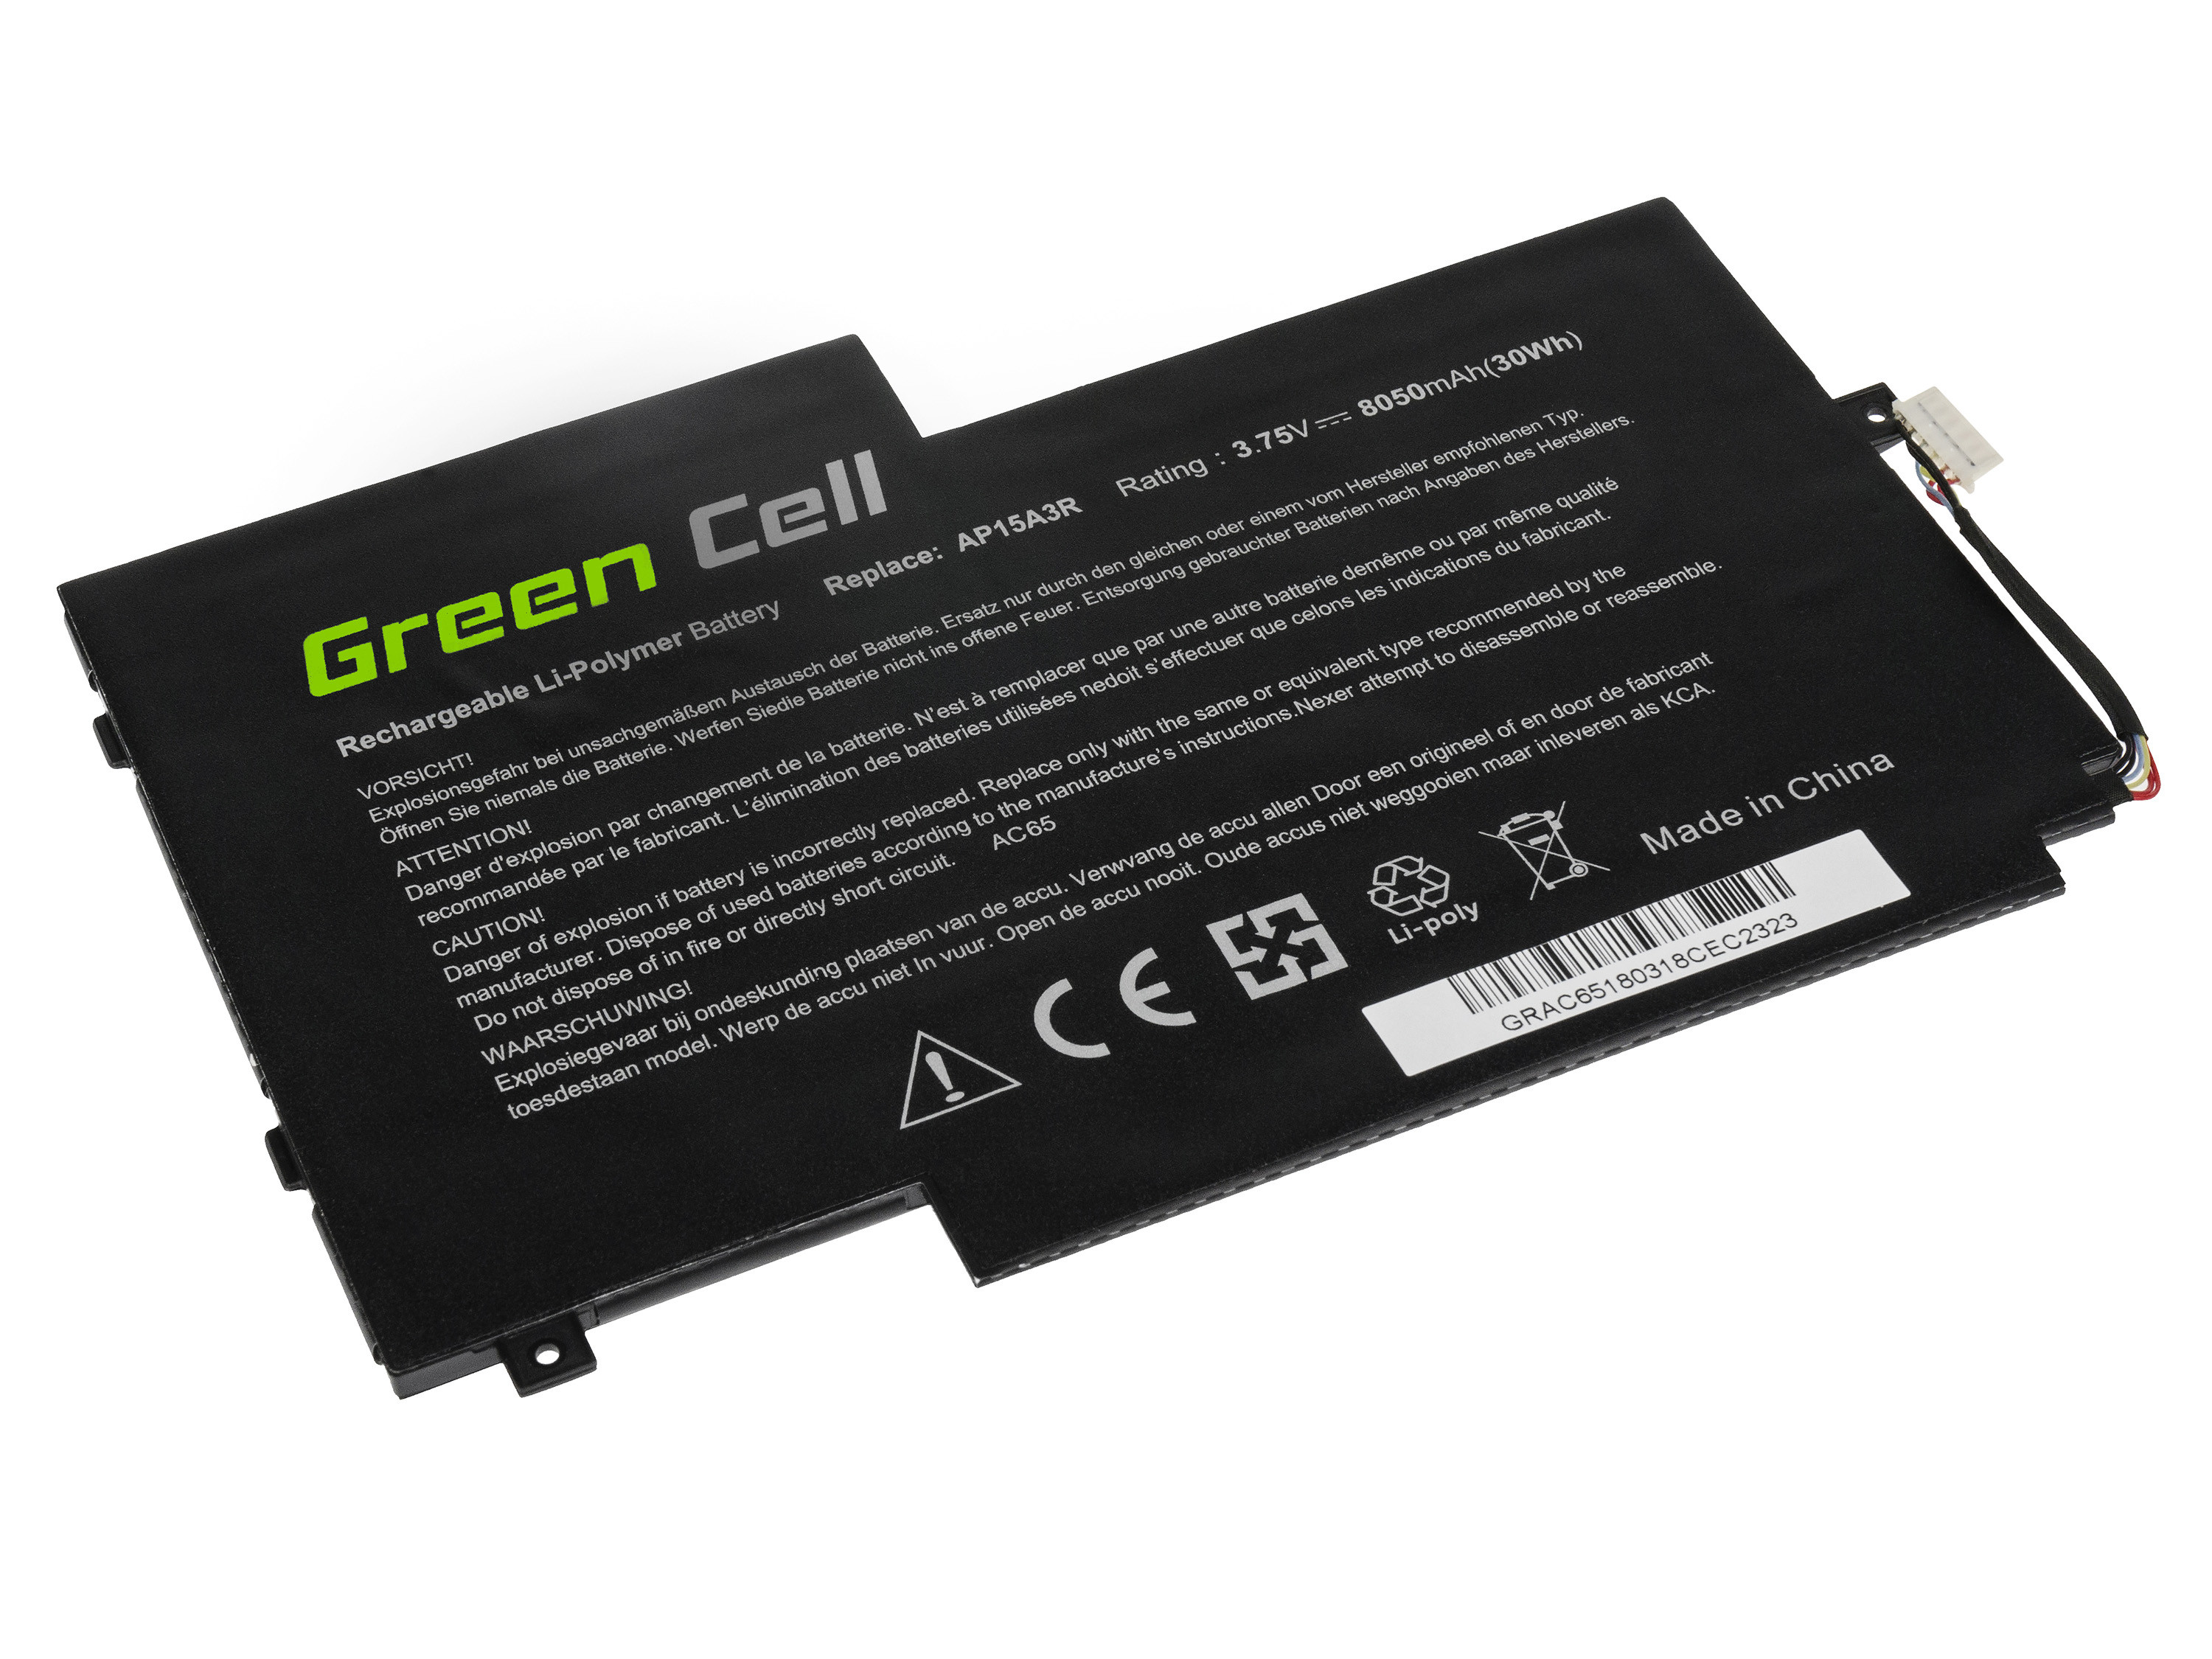 Green Cell AC65 Baterie Acer AP15A3R/AP15A8R/KT.00203.009/Acer Aspire Switch 10 E 8050mAh Li-Pol